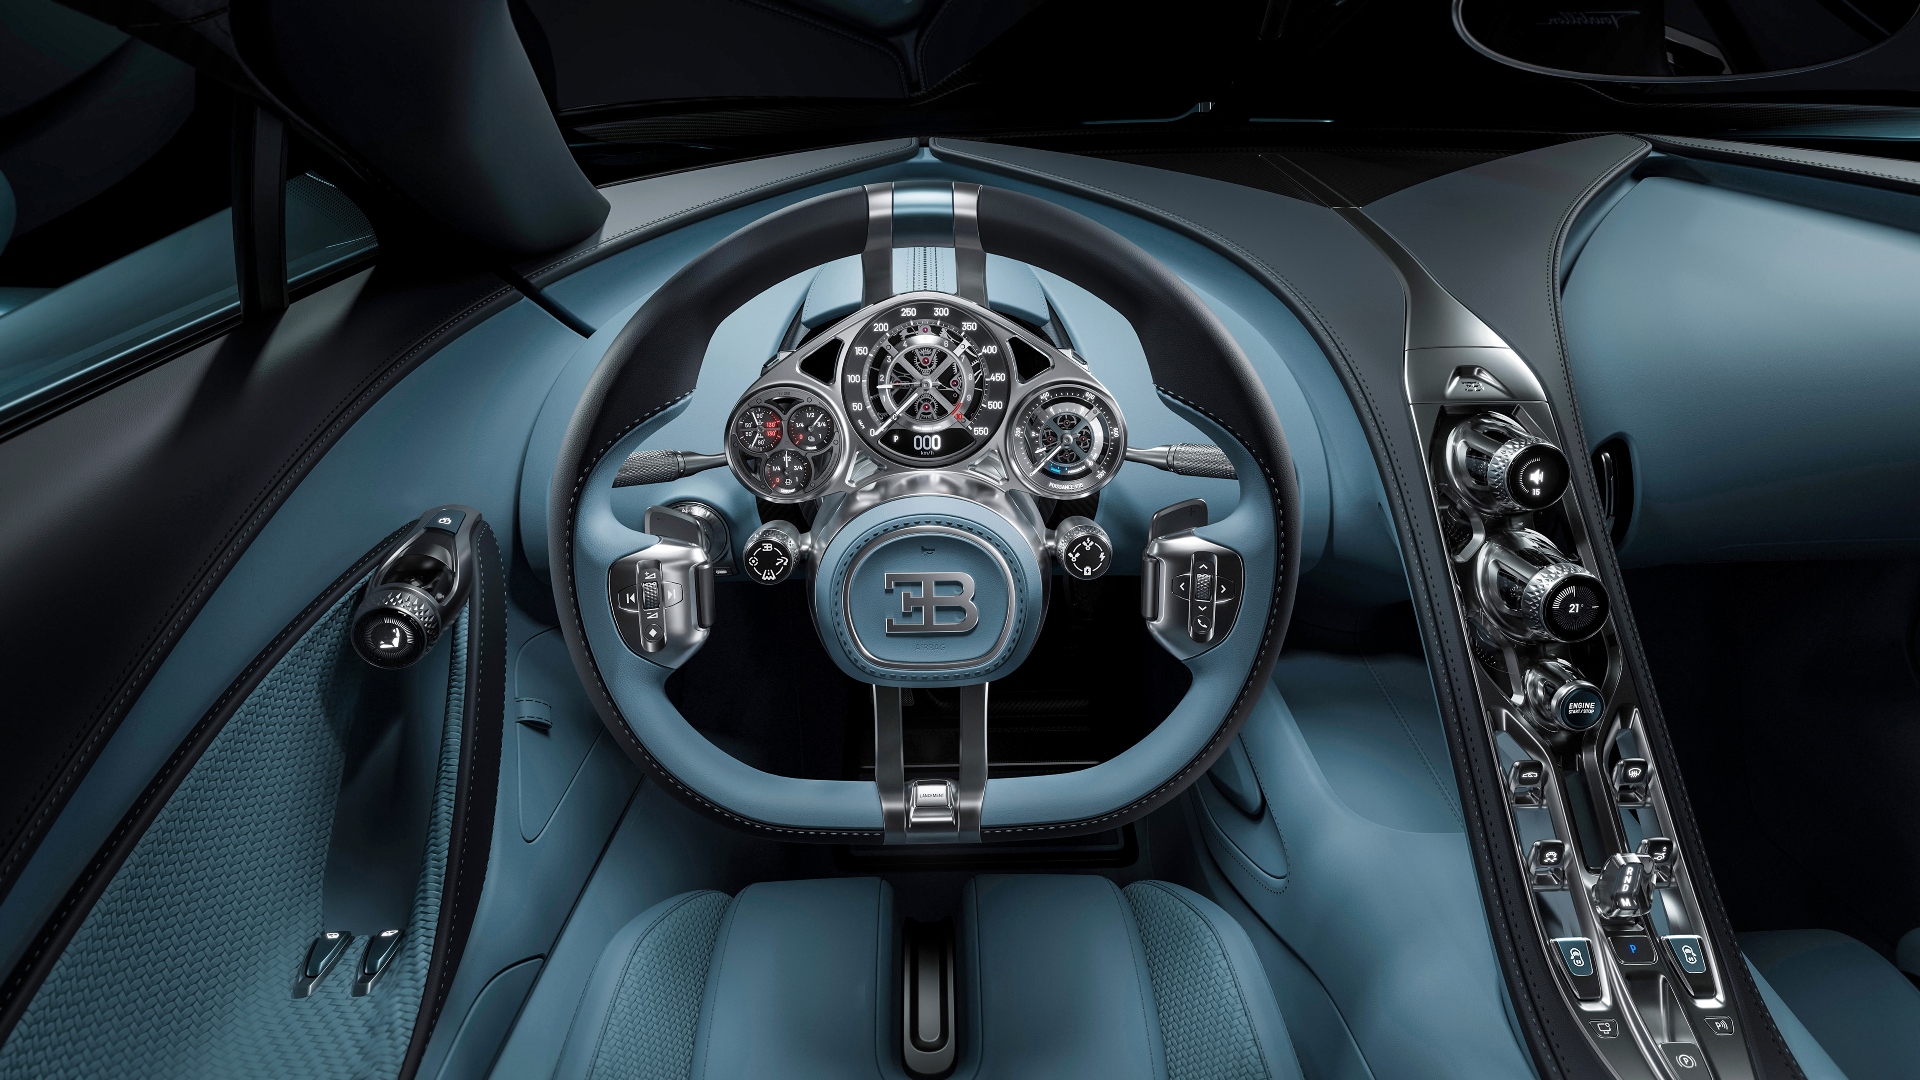 bugatti-world-premiere-presskit-images-39-cgi.jpg